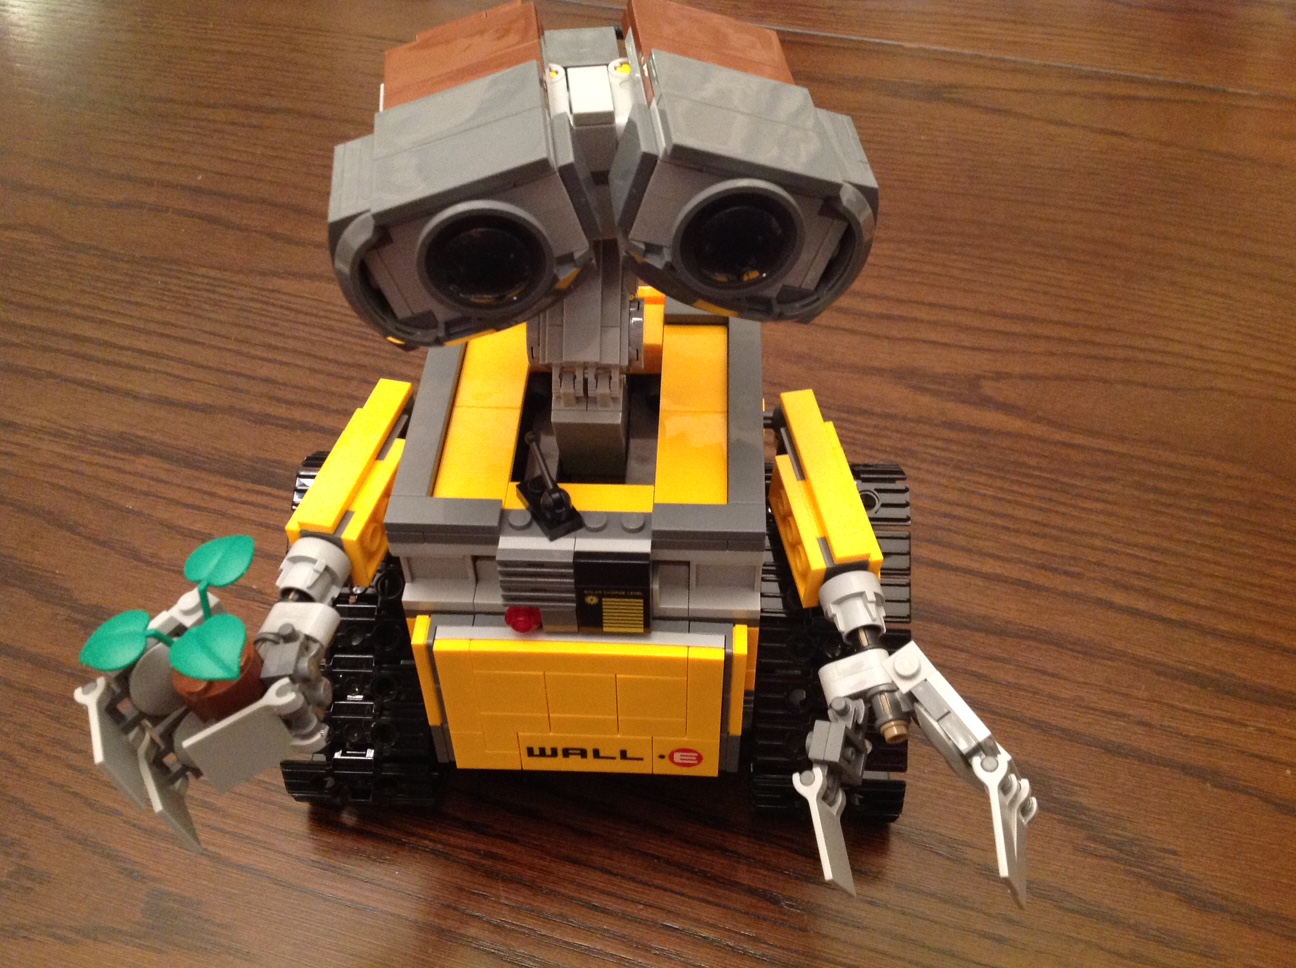 LEGO IDEAS - WALL•E